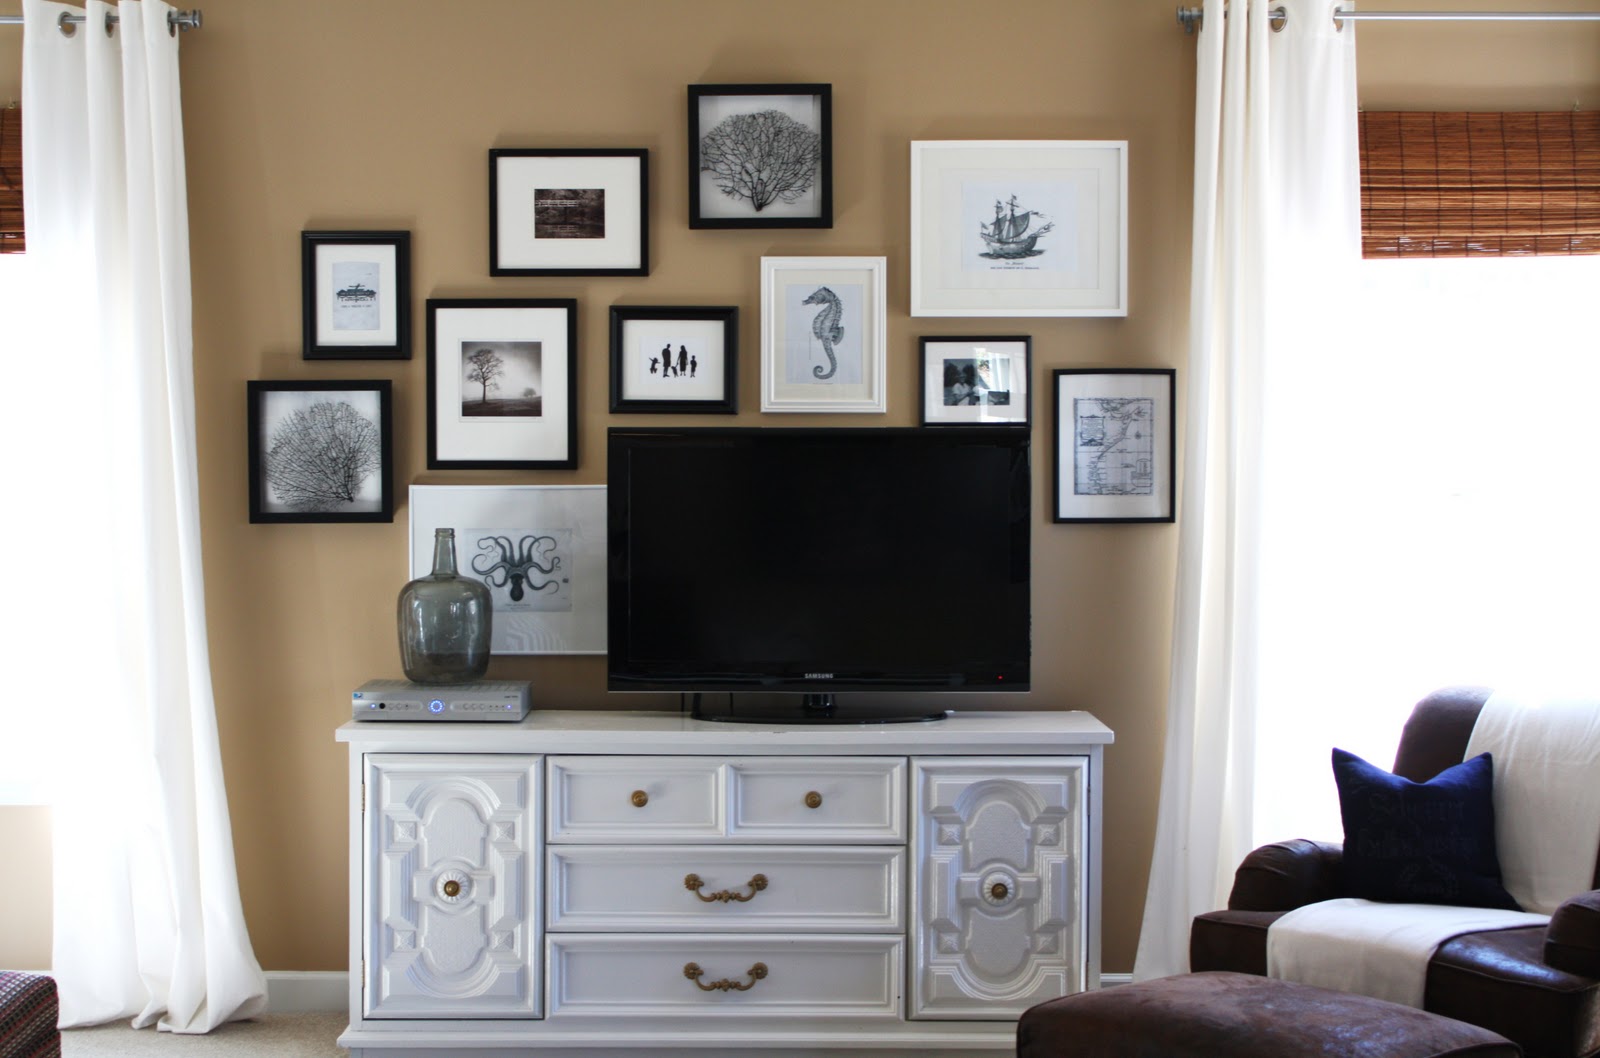 wallpaper behind tv,furniture,room,interior design,property,living room